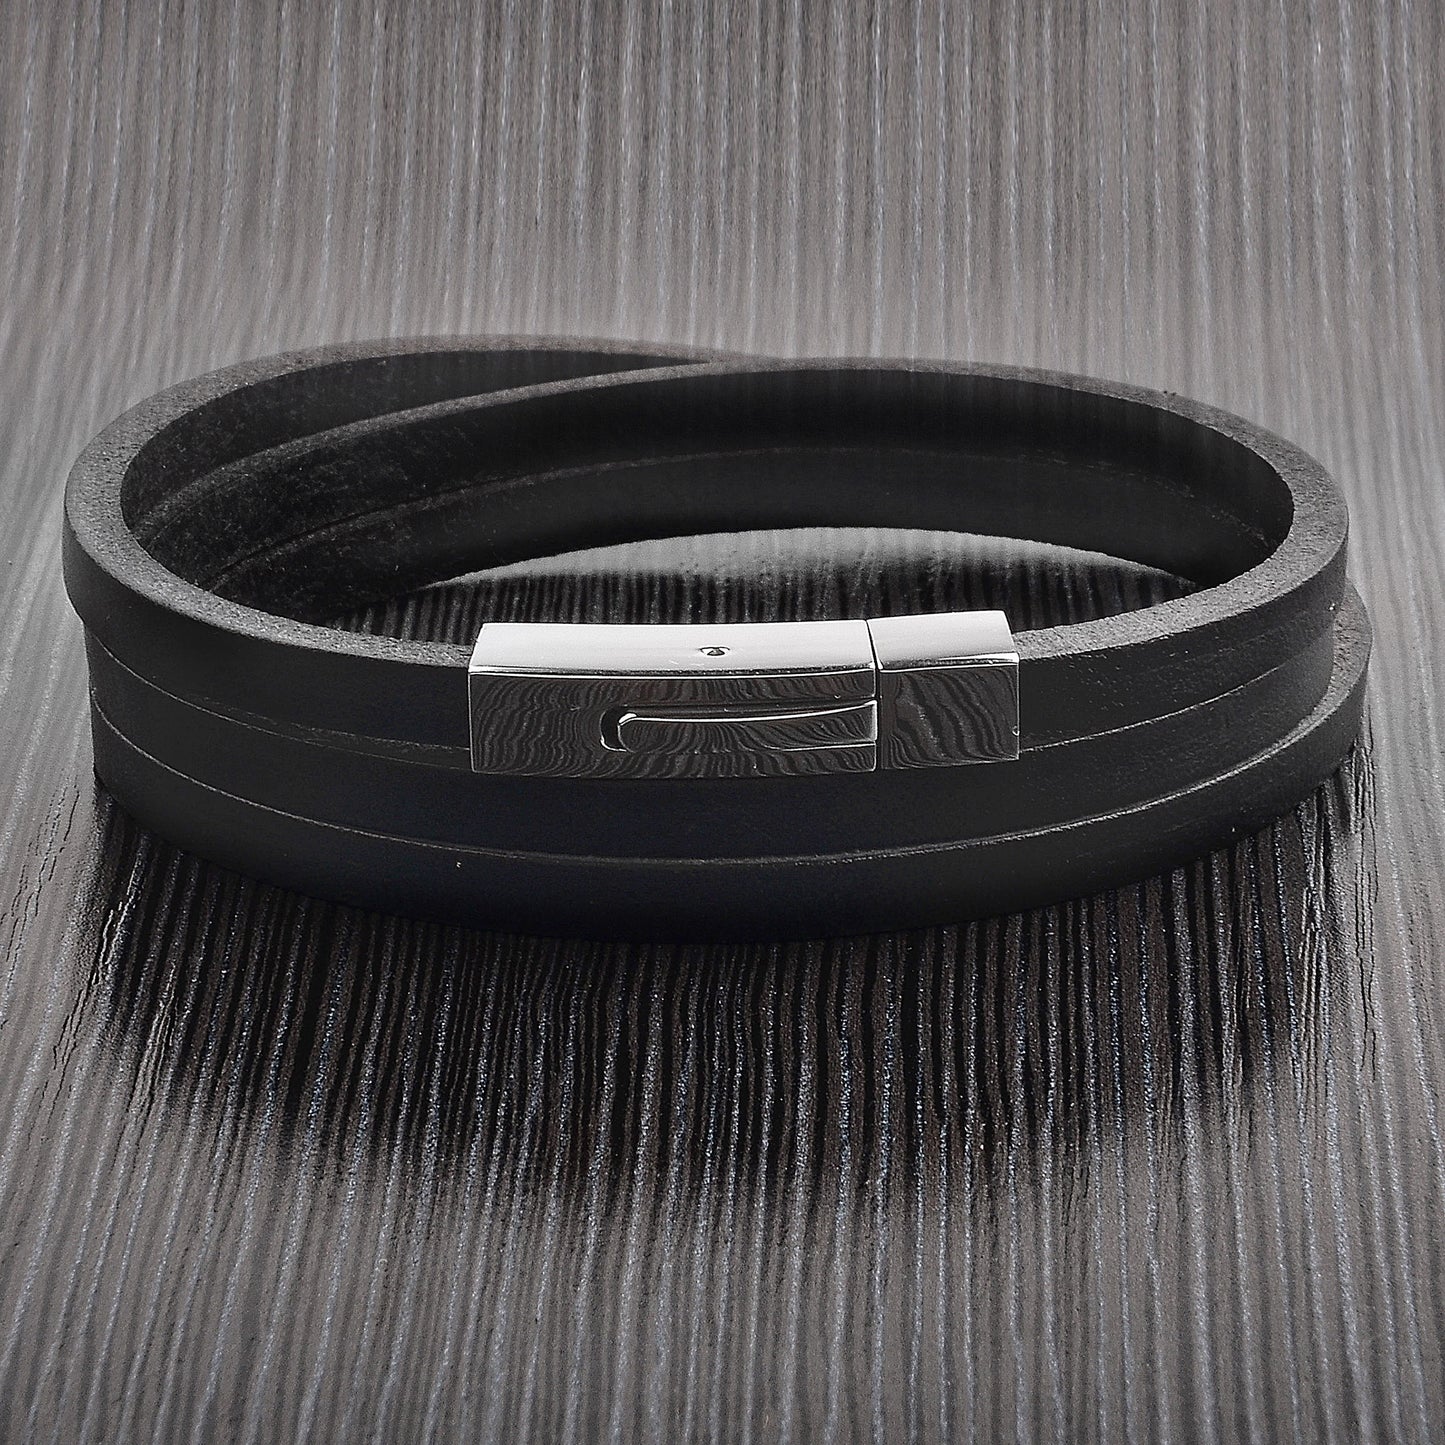 Men's Stainless Steel Clasp Black Leather Wrap Bracelet